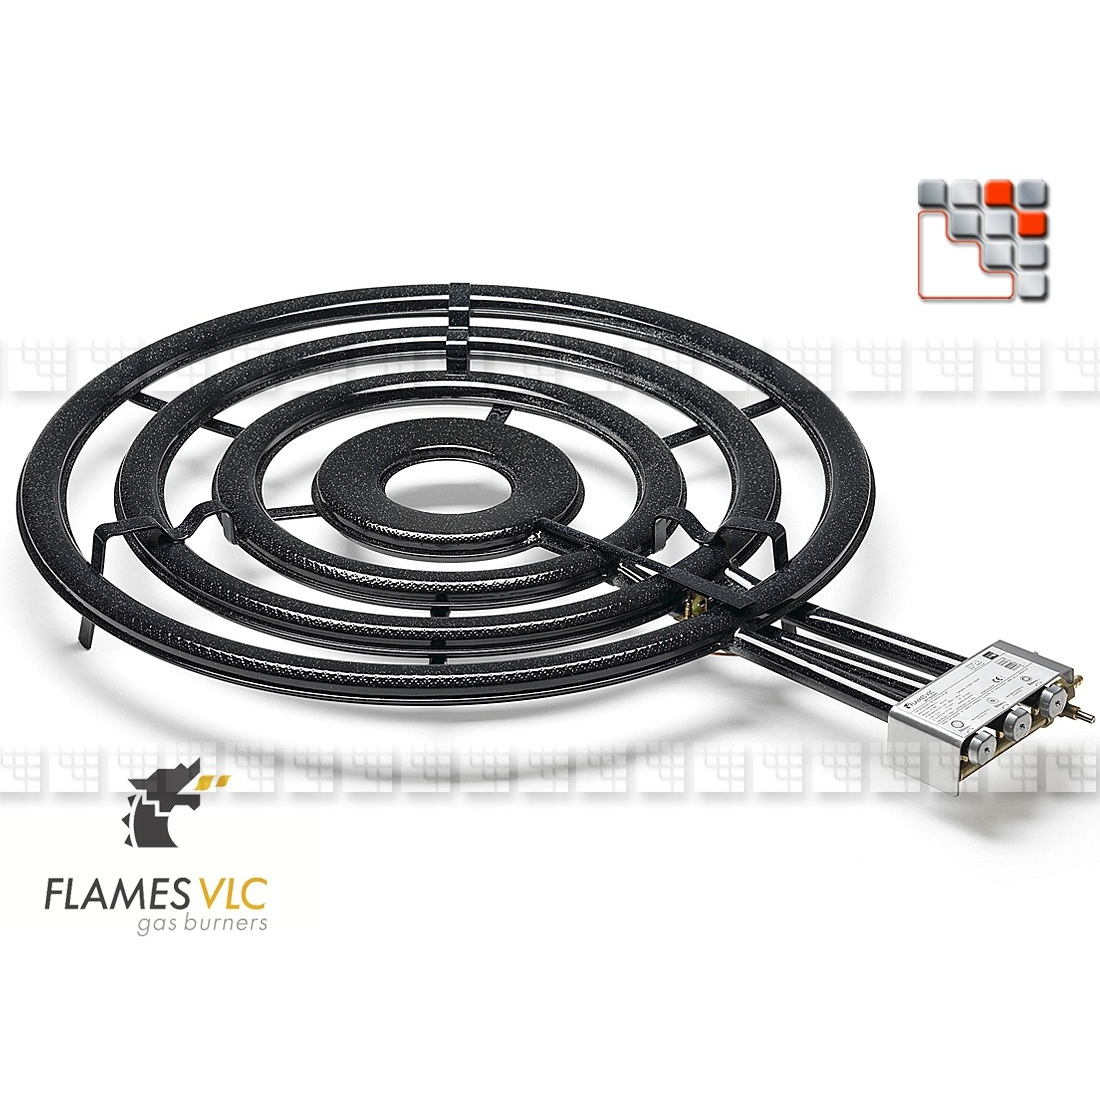 Bruleur Gaz TT-900BFR VLC F08-TT900 FLAMES VLC® Bruleur Gaz Flames VLC